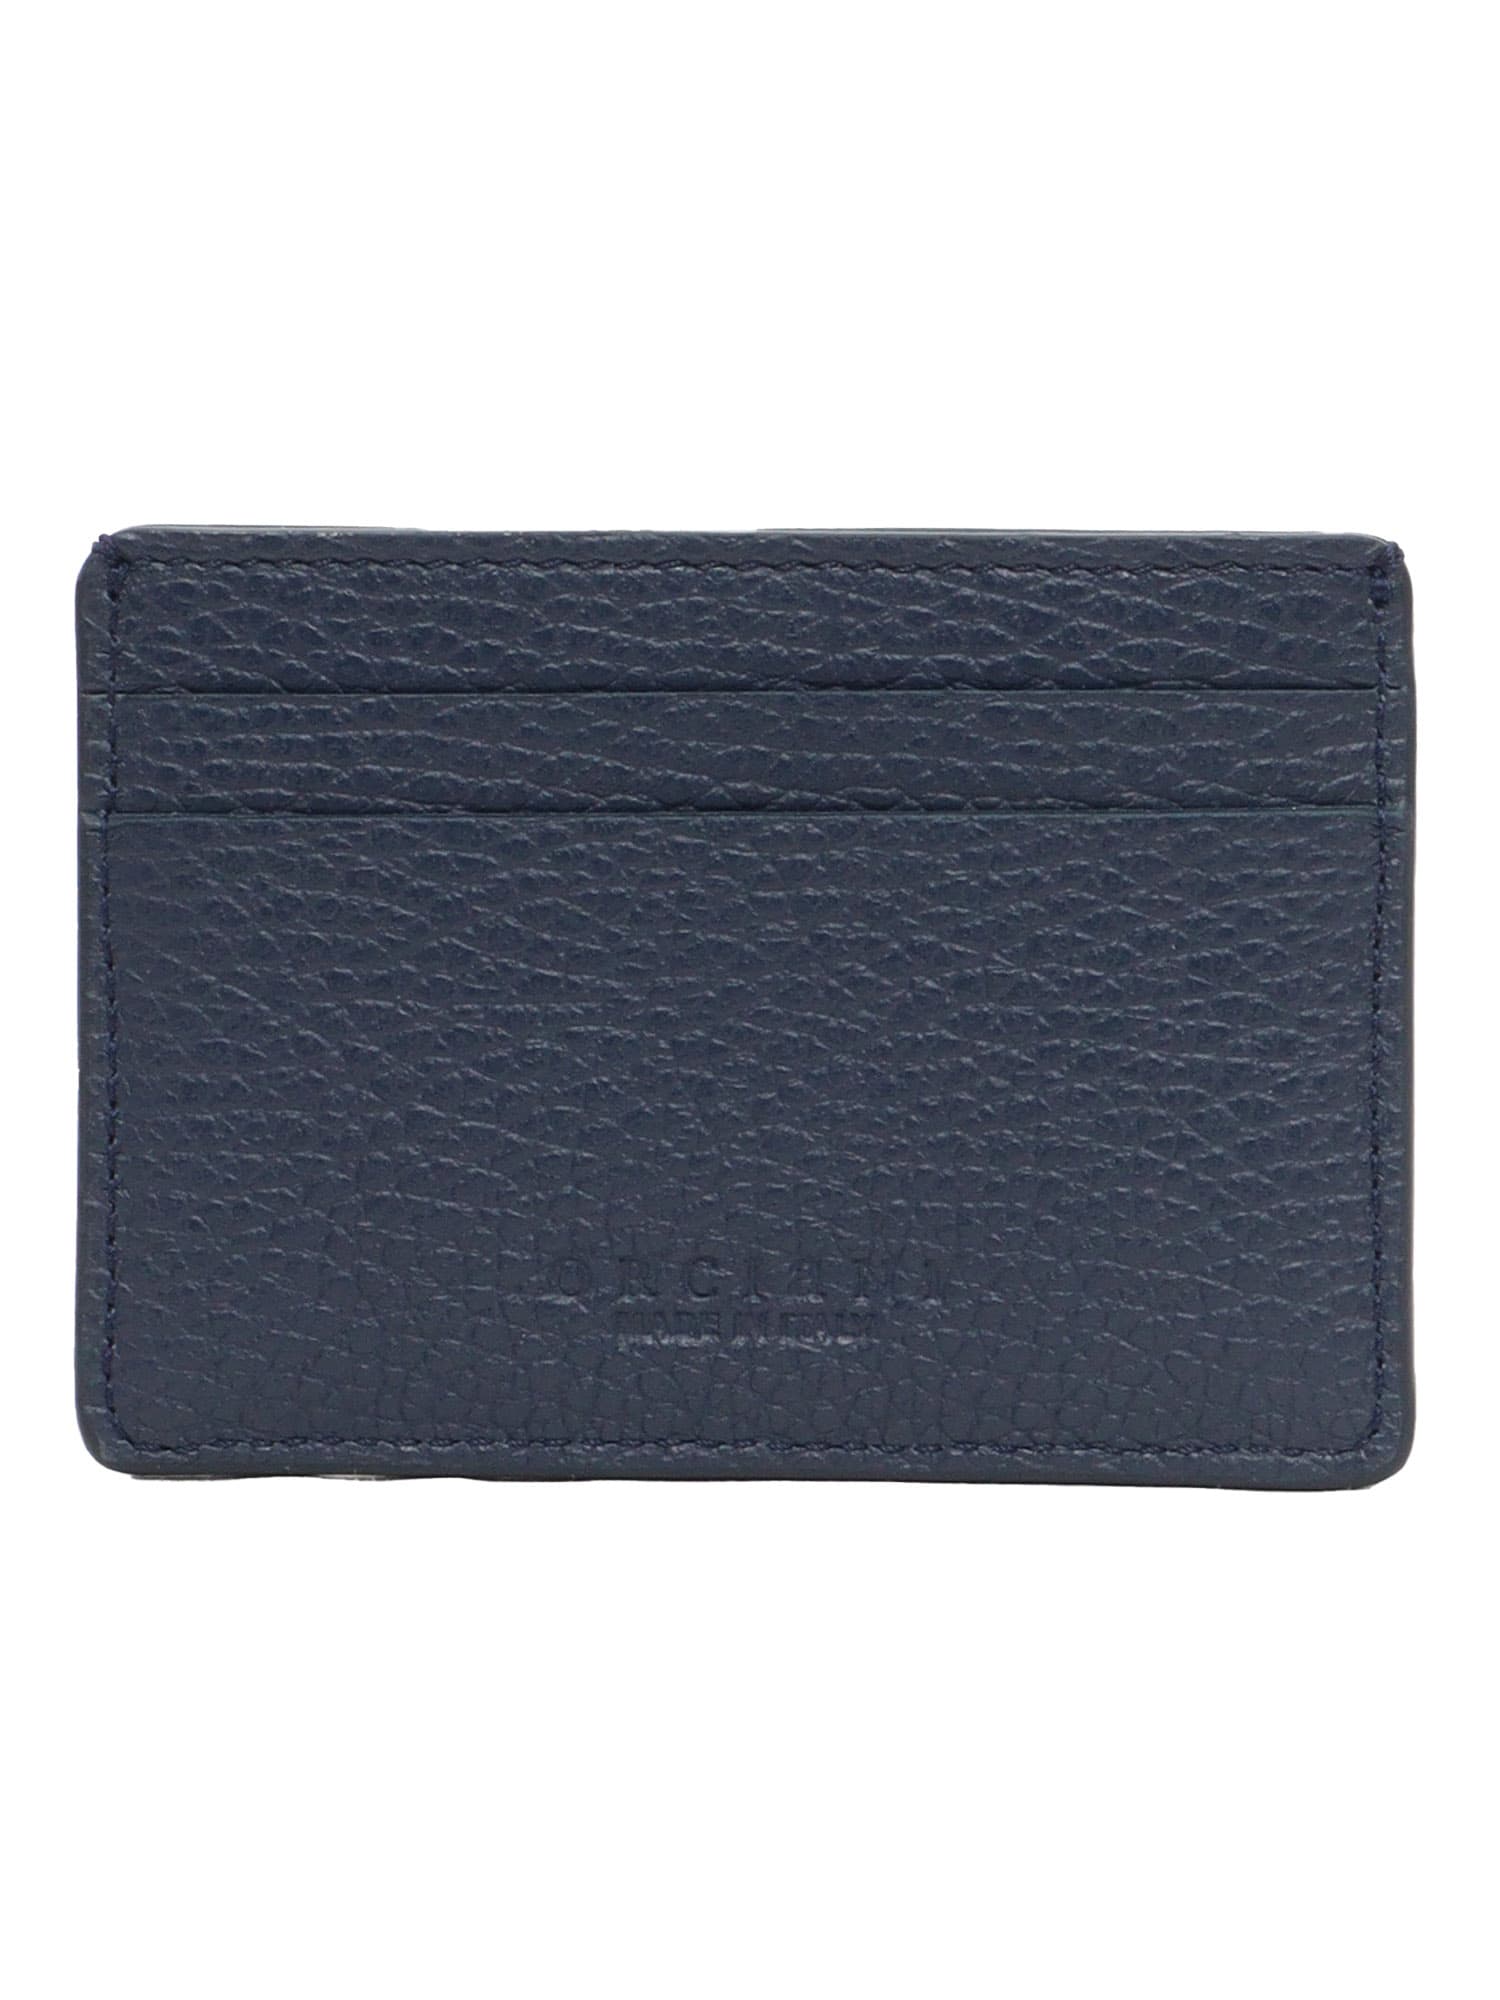 Shop Orciani Blue Wallet